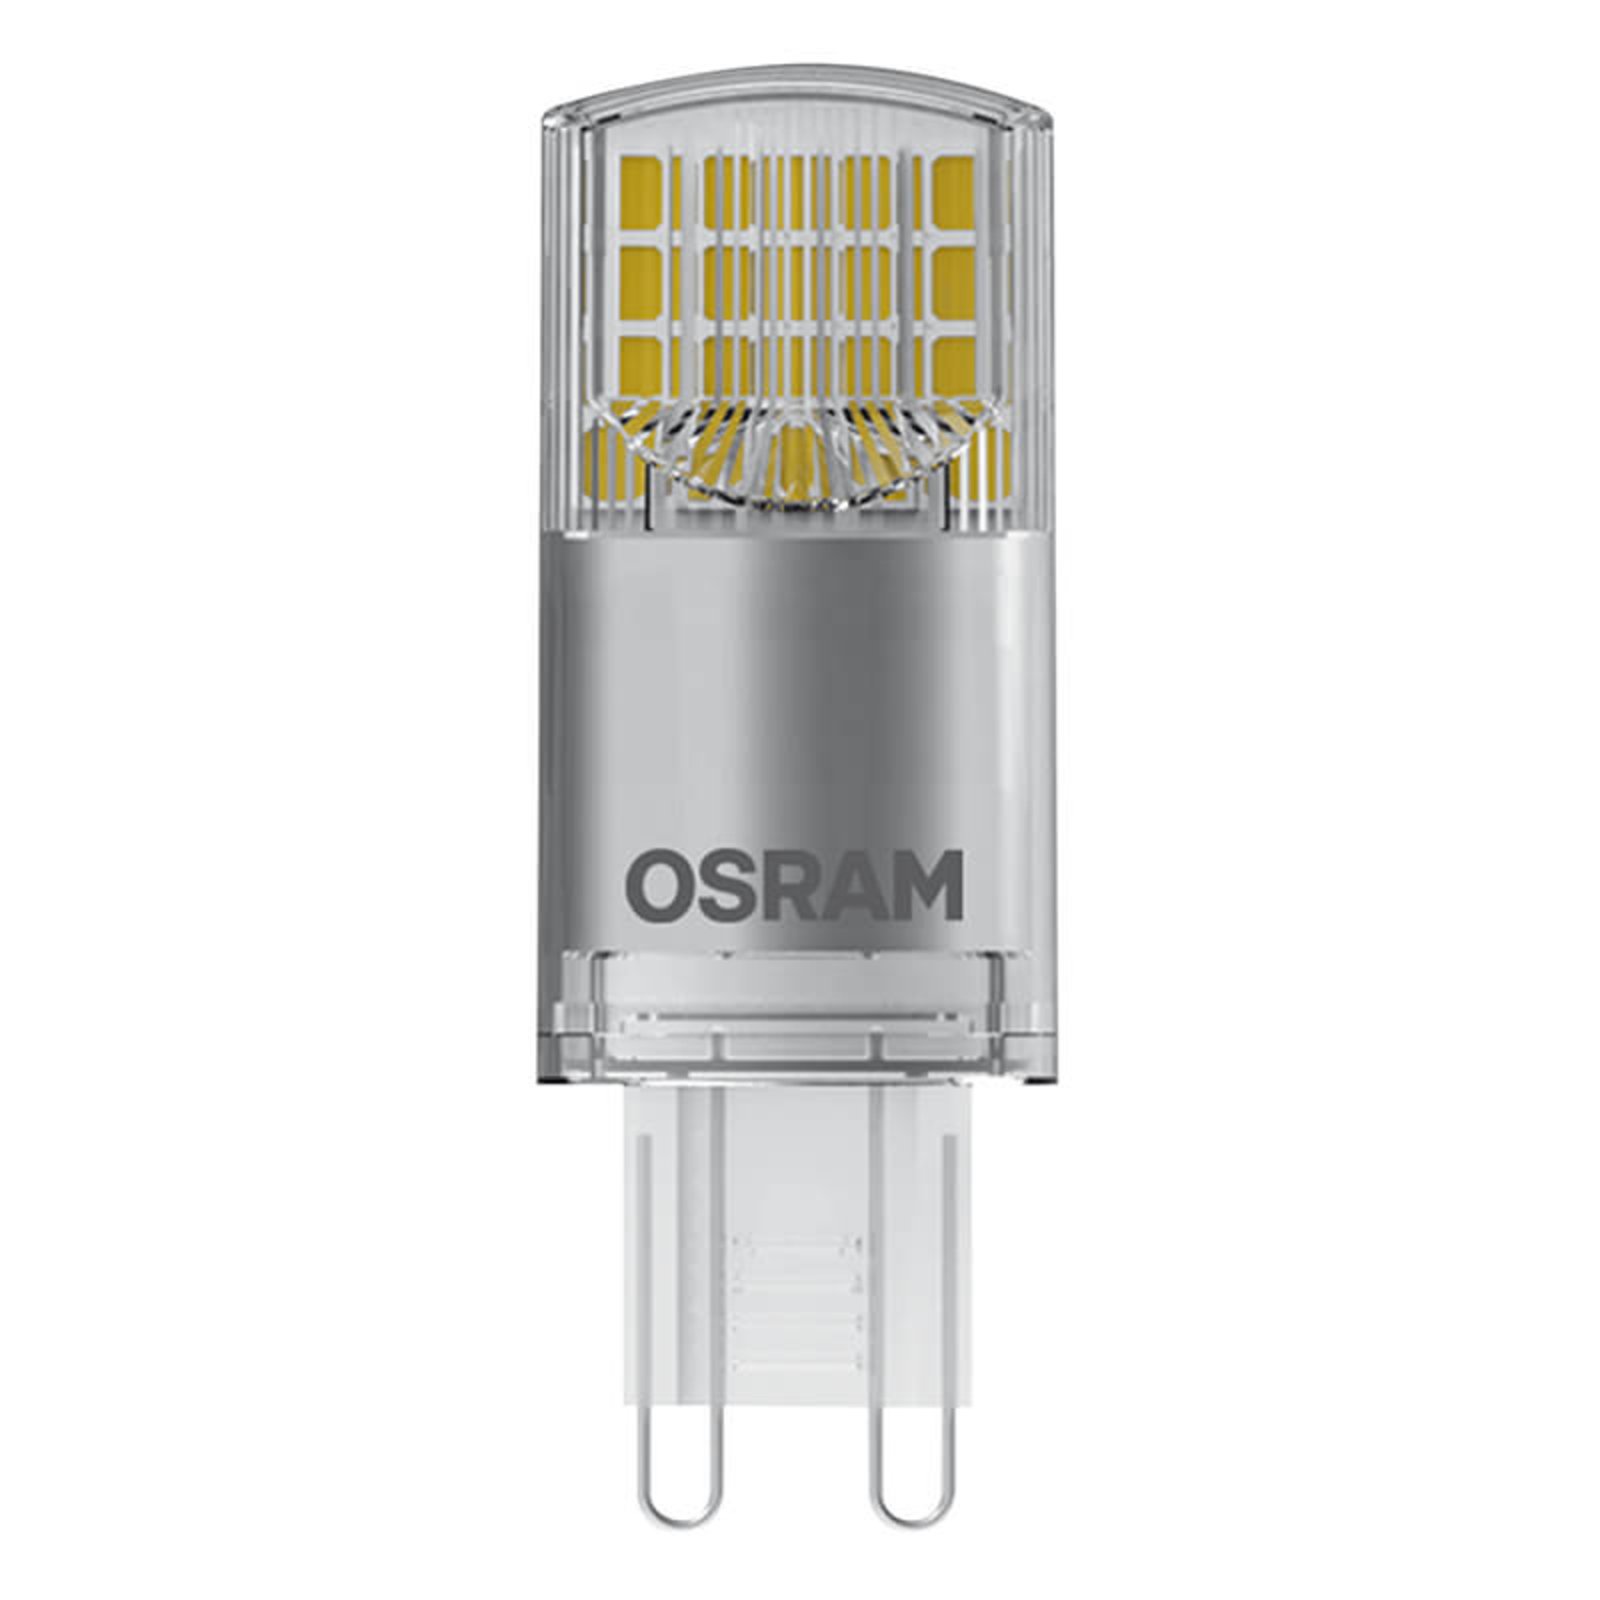 OSRAM LED-stiftpære G9 3,8 W, varmhvid, 470 lm